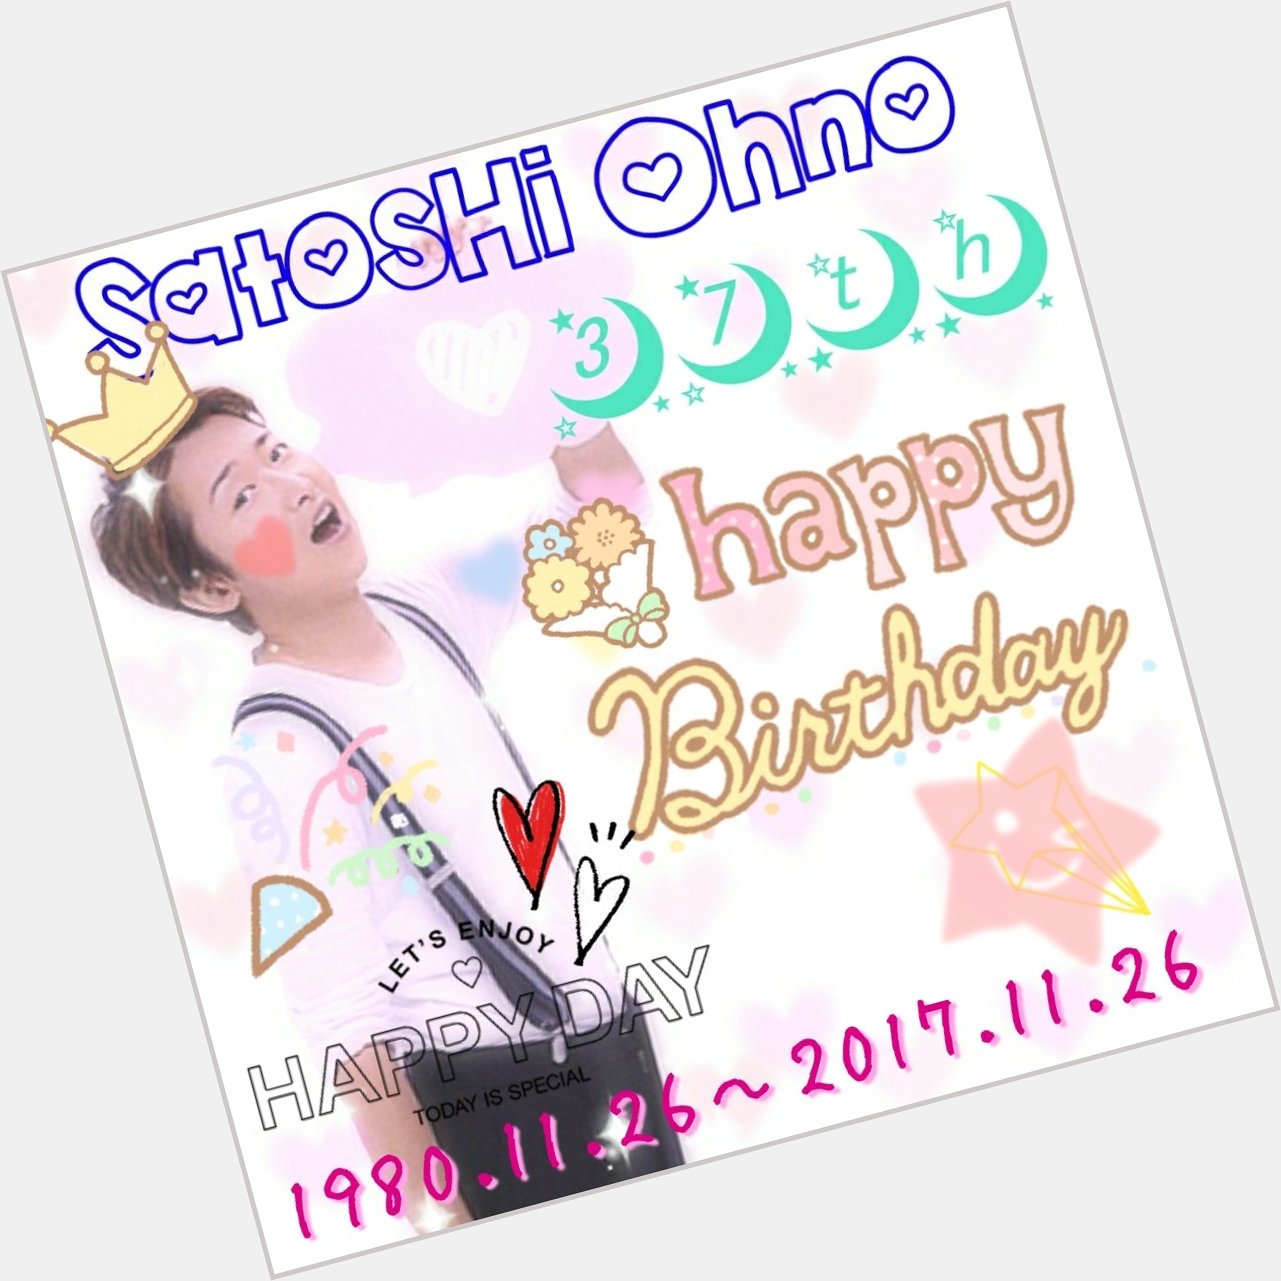 Satoshi Ohno 37th .*   Happy Birthday °  *. 